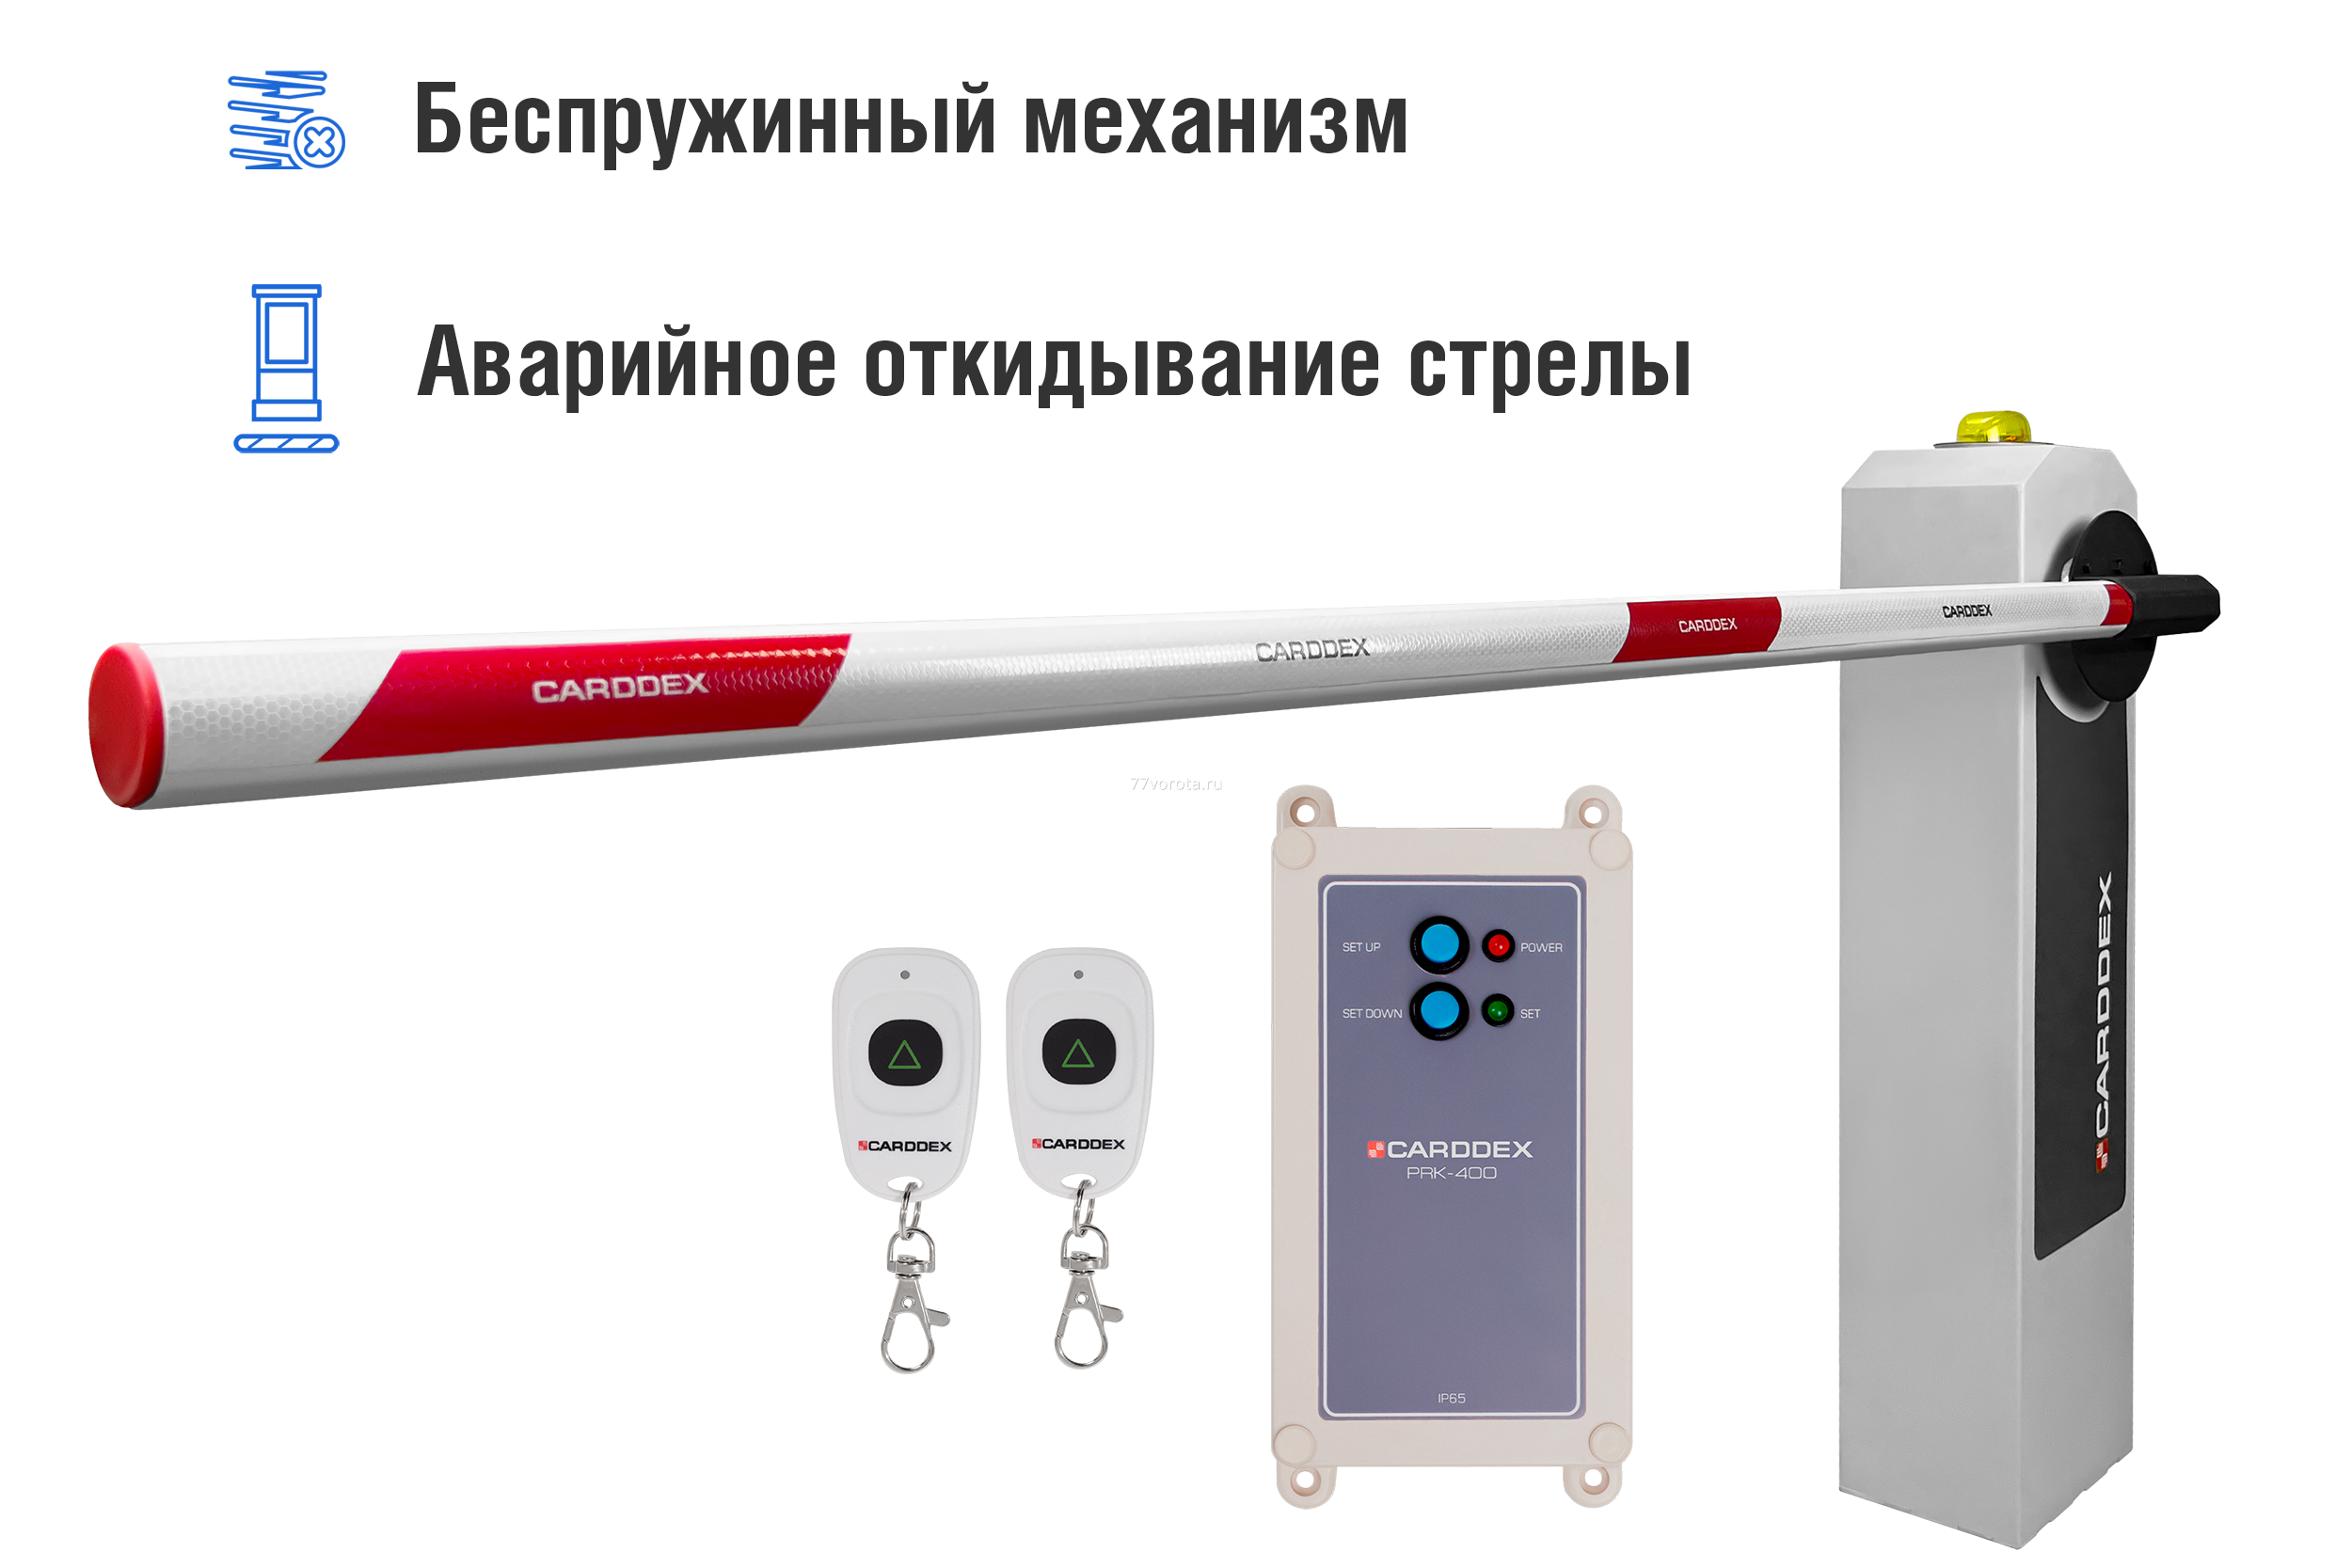 Автоматический шлагбаум CARDDEX «RBM-L», комплект  «Стандарт плюс-L» - фото 1